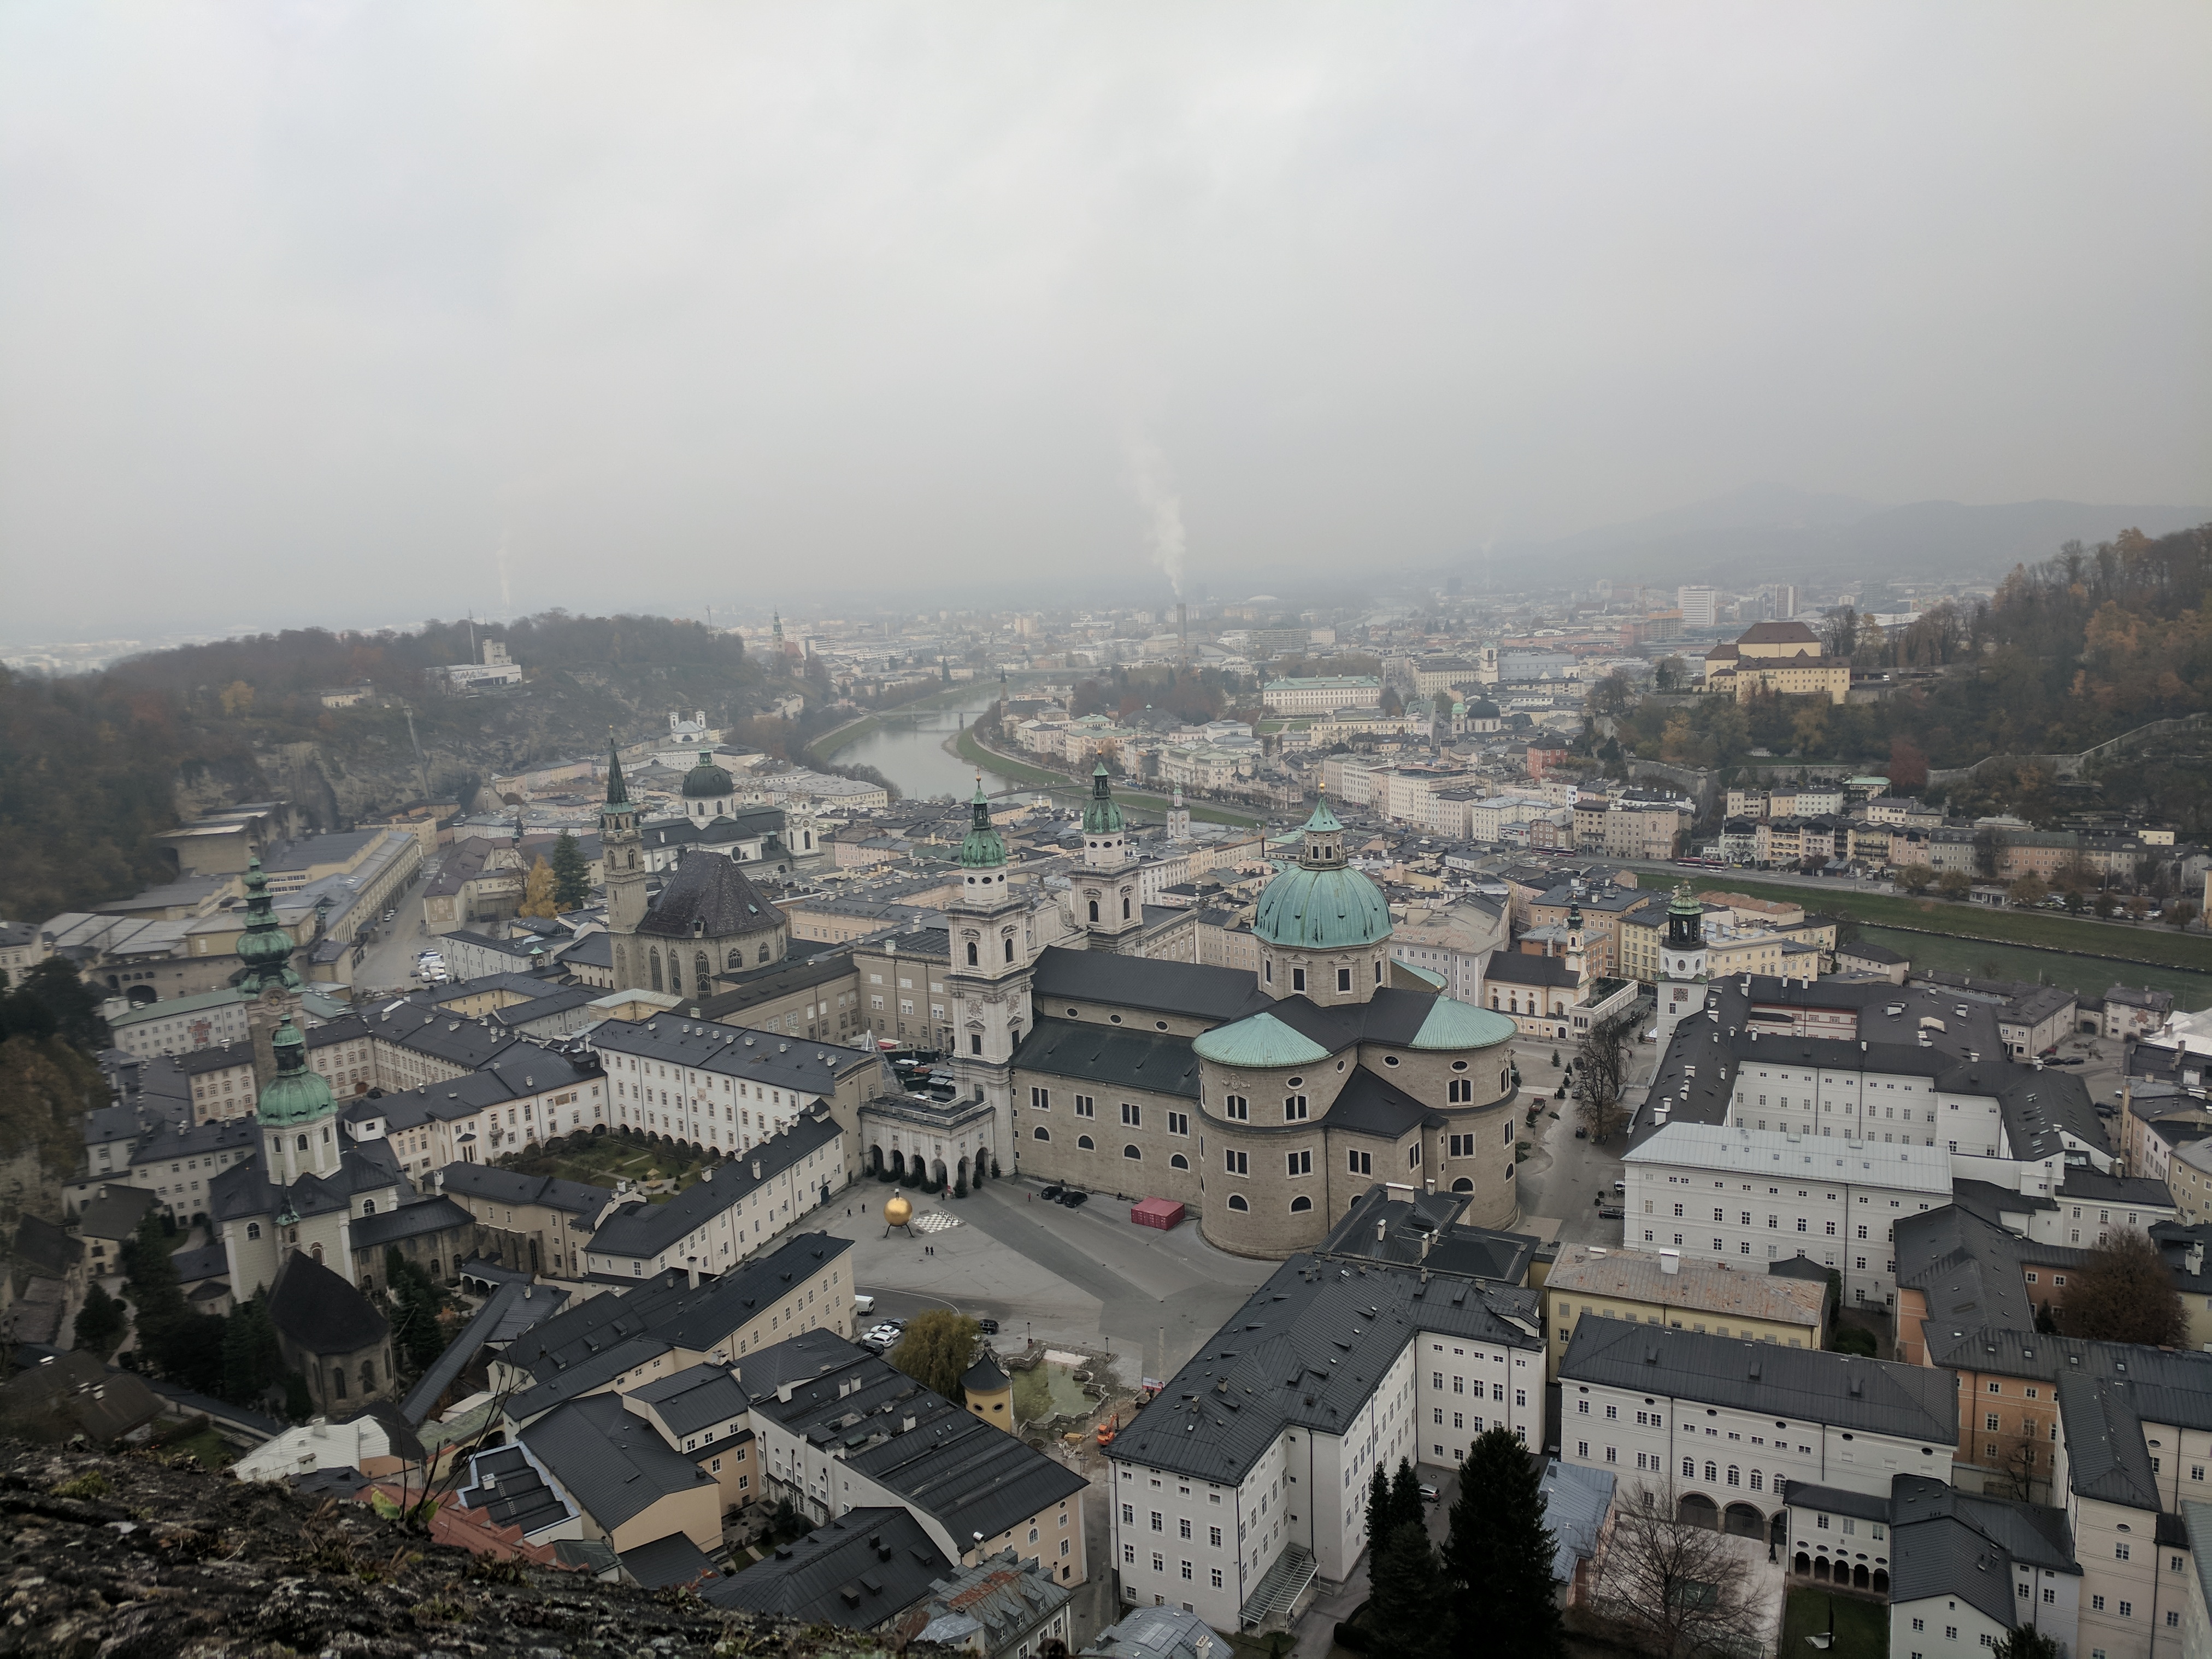 View from Hohensalzburg Fortress overlooking Salzburg